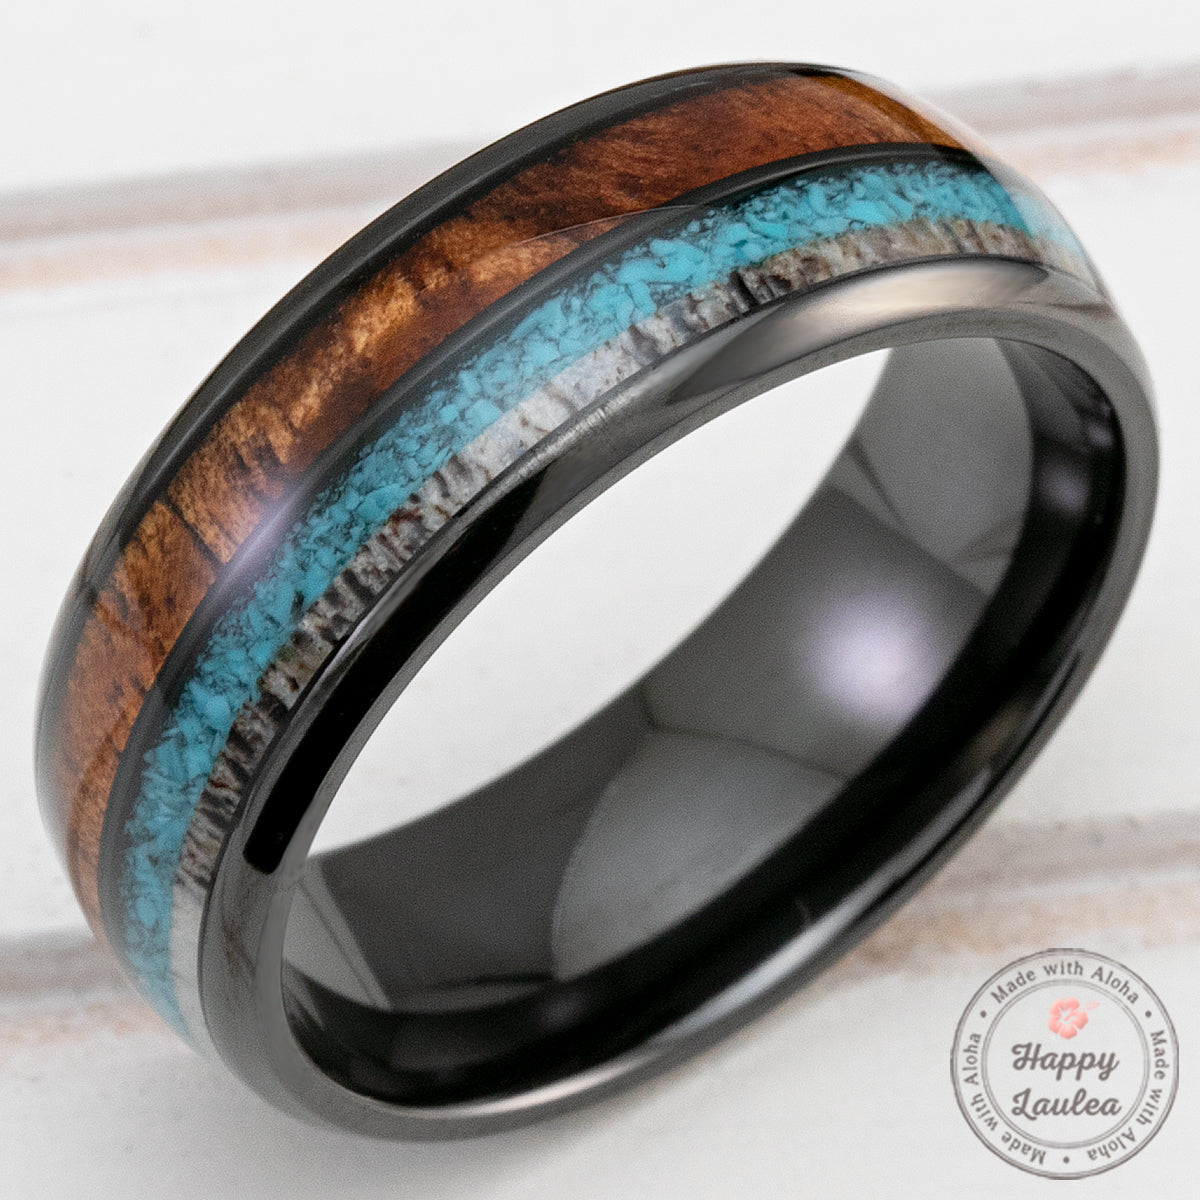 Black Zirconium 8mm Ring with Antler, Turquoise & Hawaiian Koa Wood Tri-Inlay - Dome Shape, Comfort Fitment